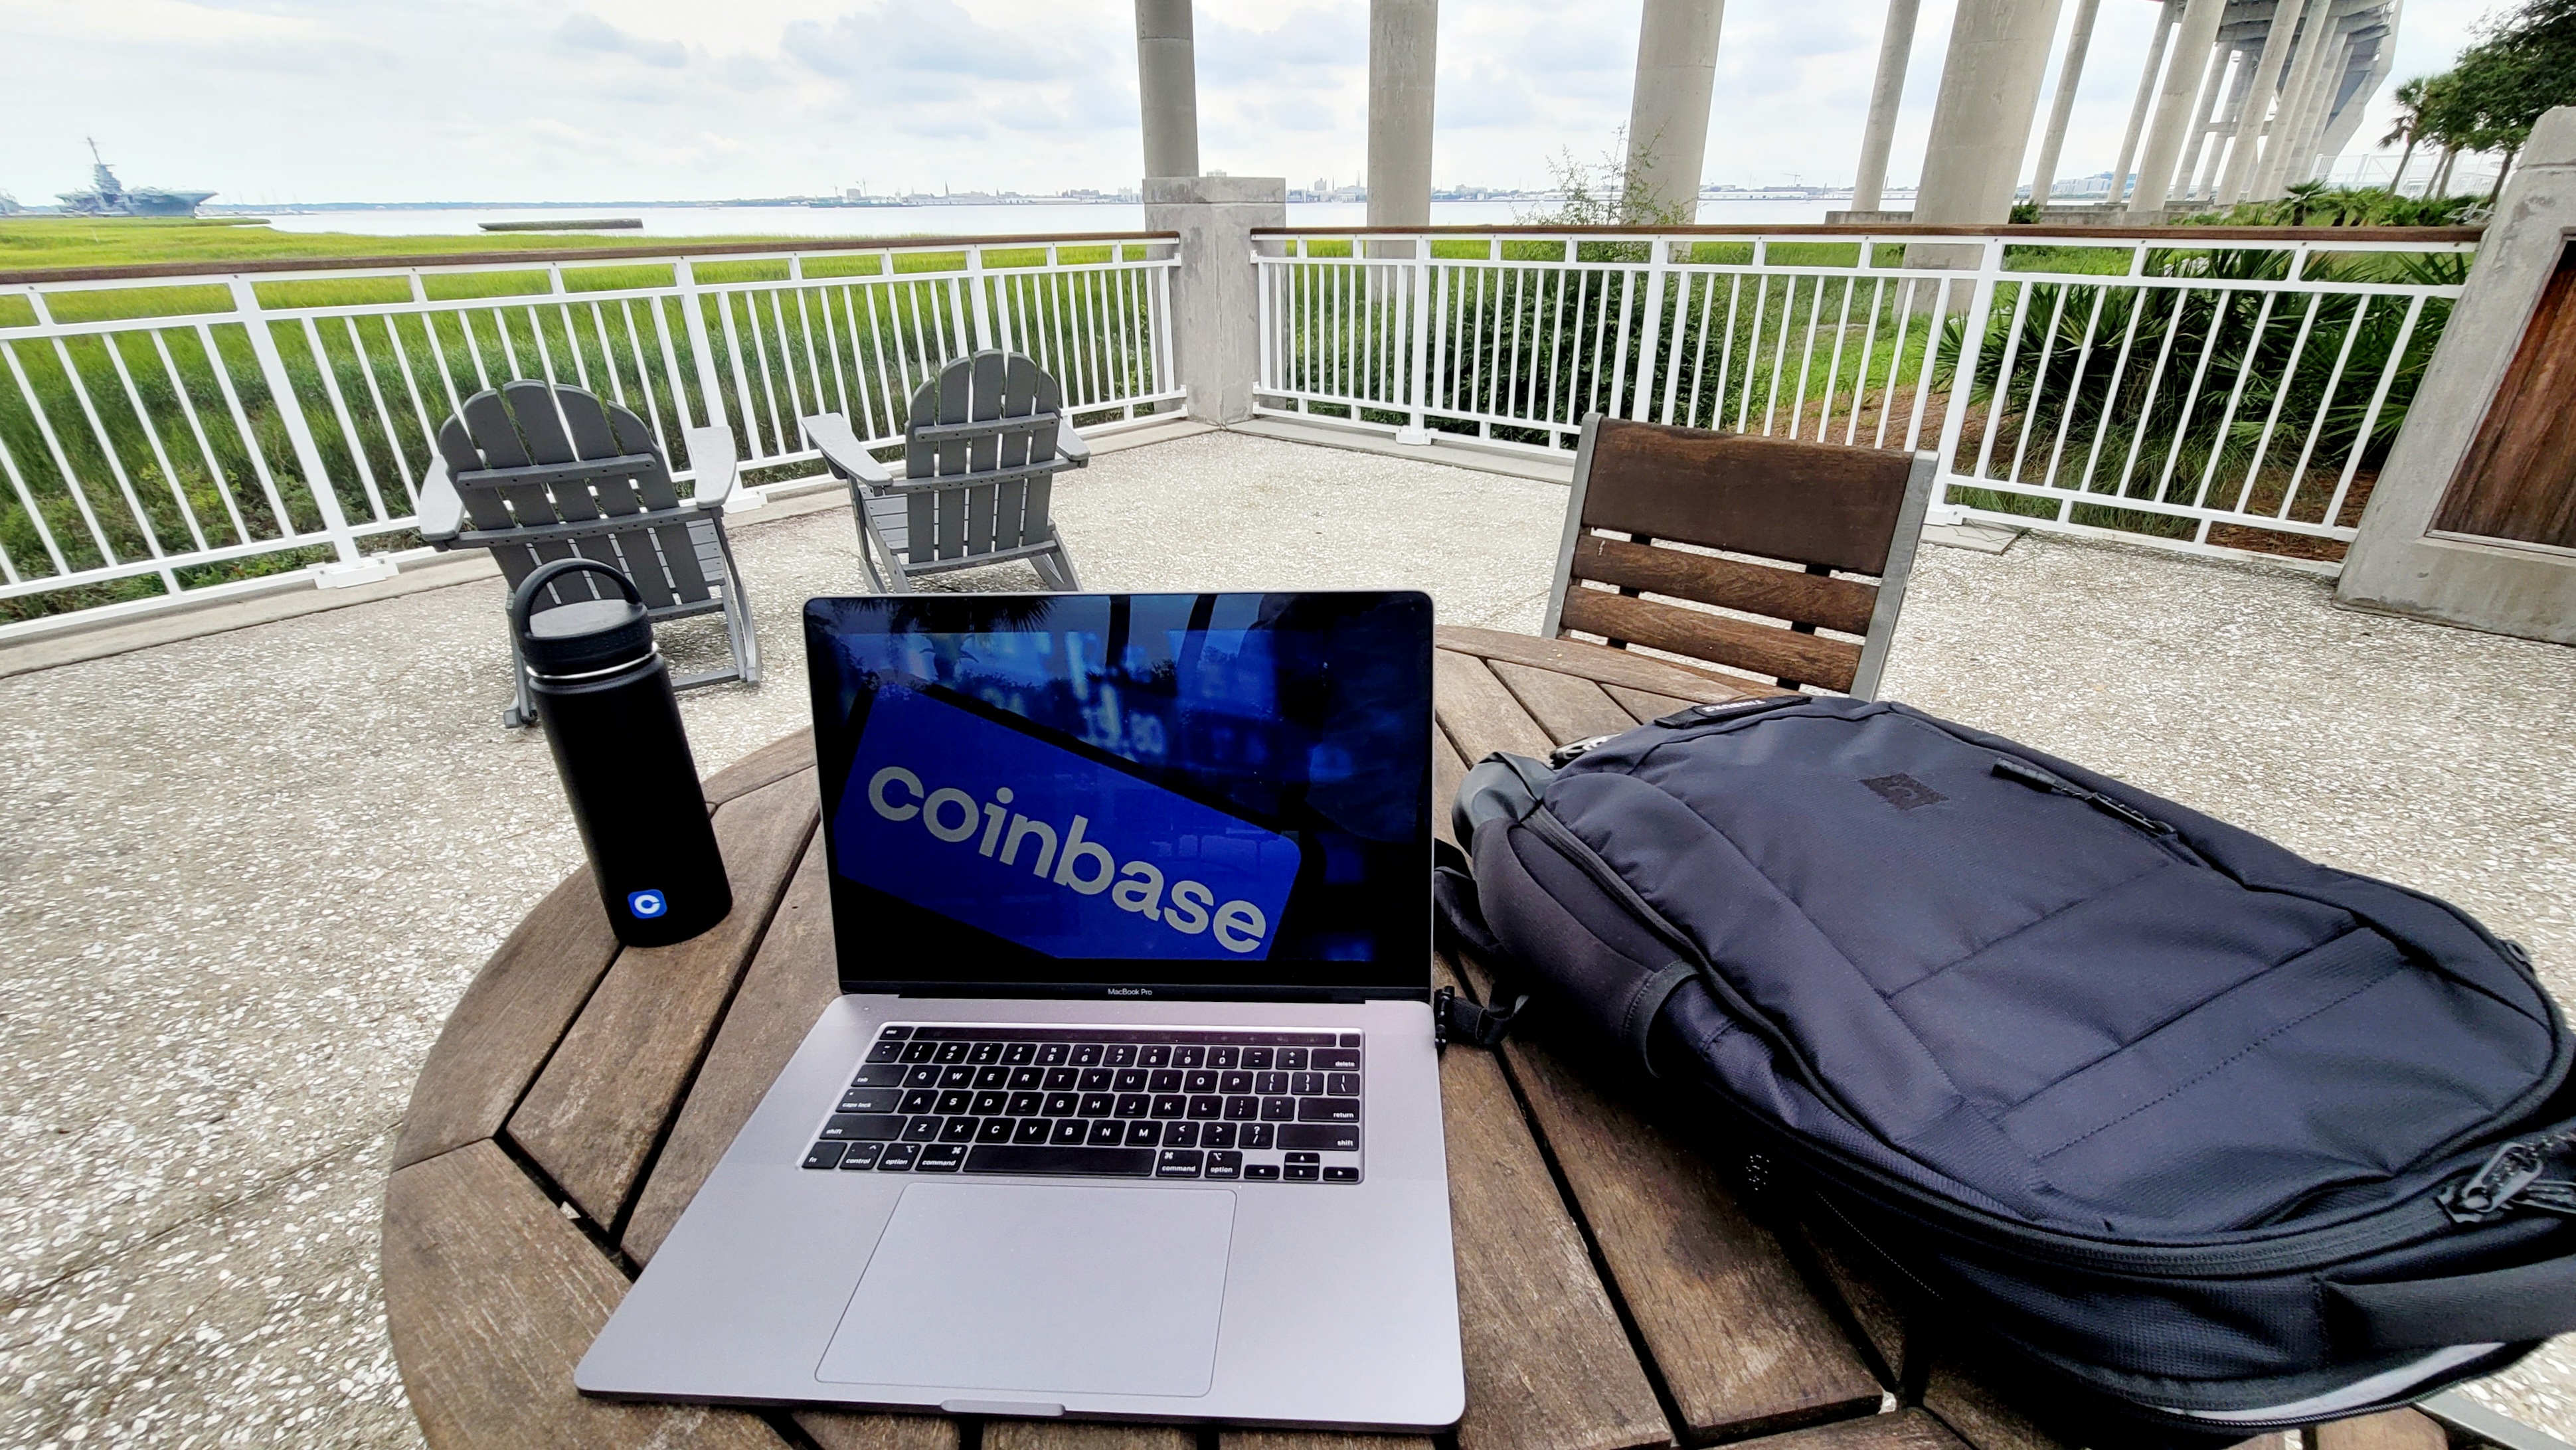 A Coinbase employee's remote workplace setup